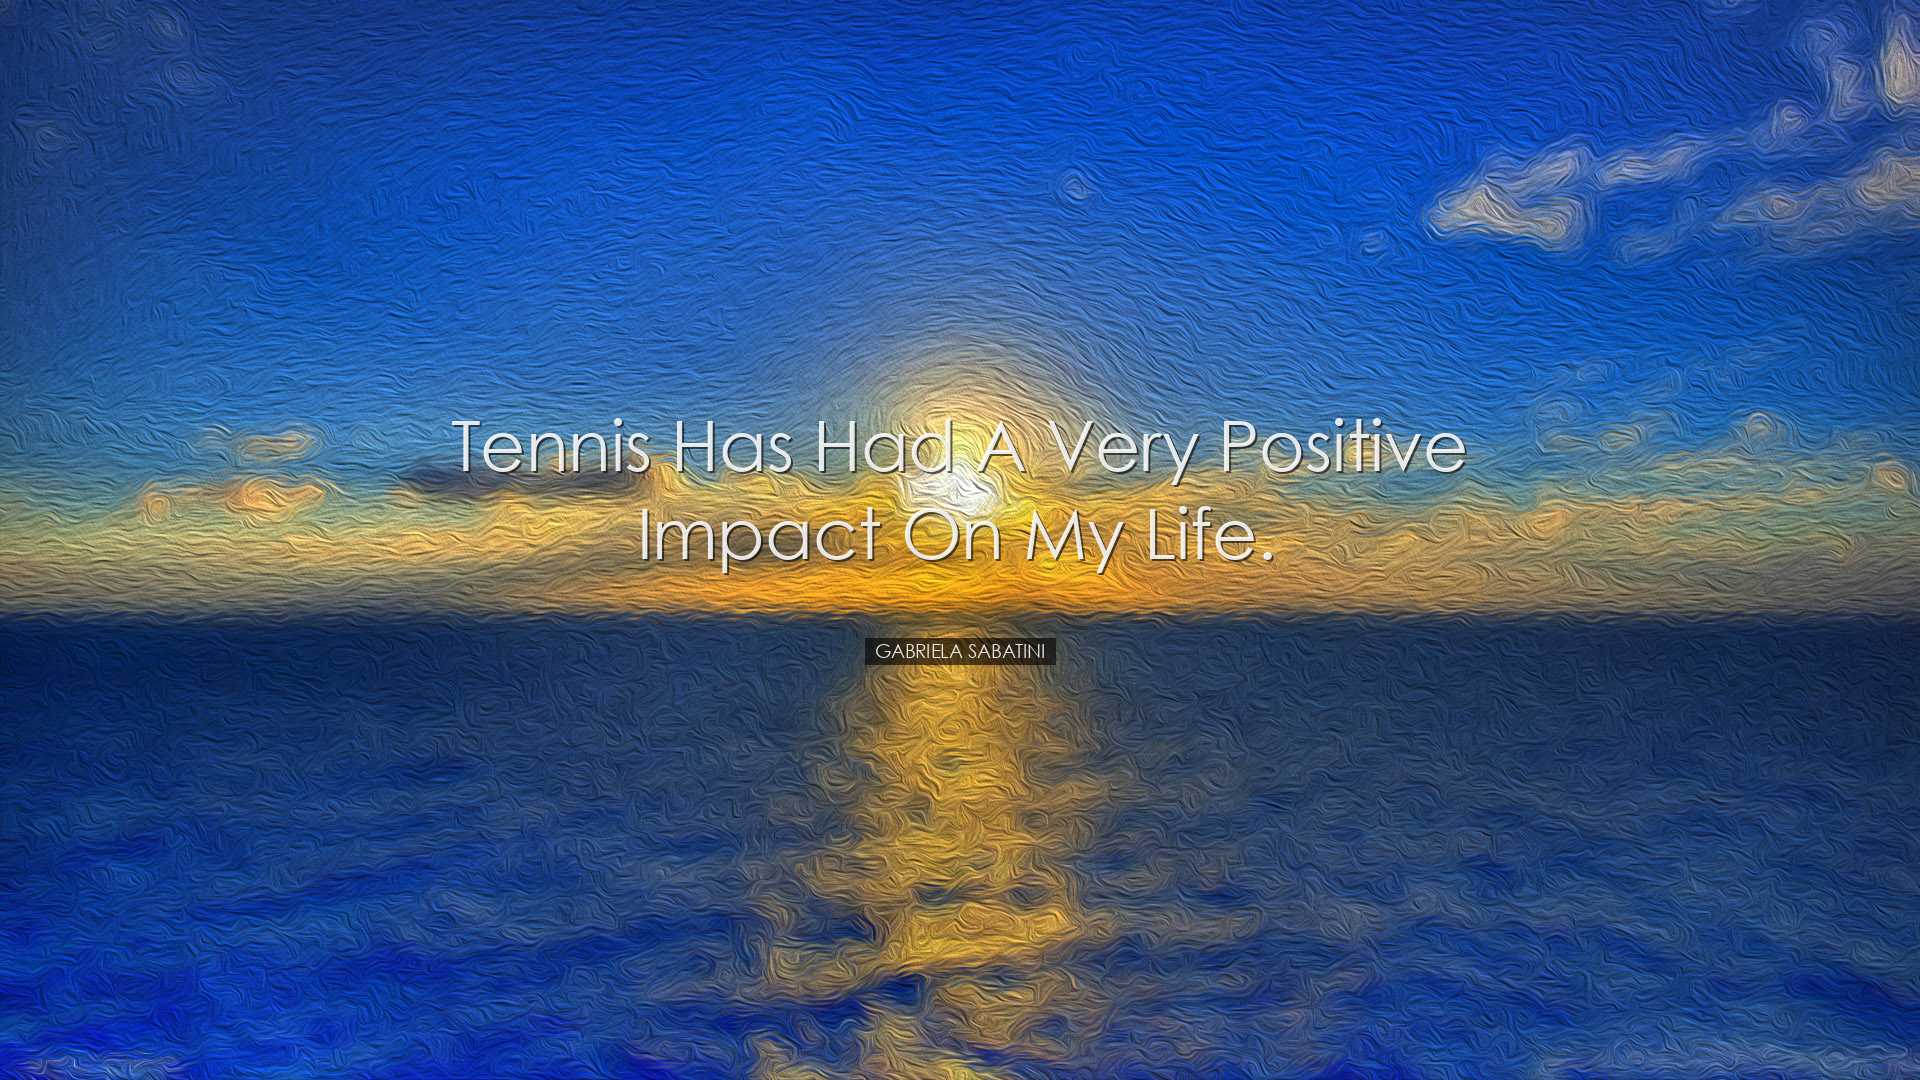 Tennis has had a very positive impact on my life. - Gabriela Sabat